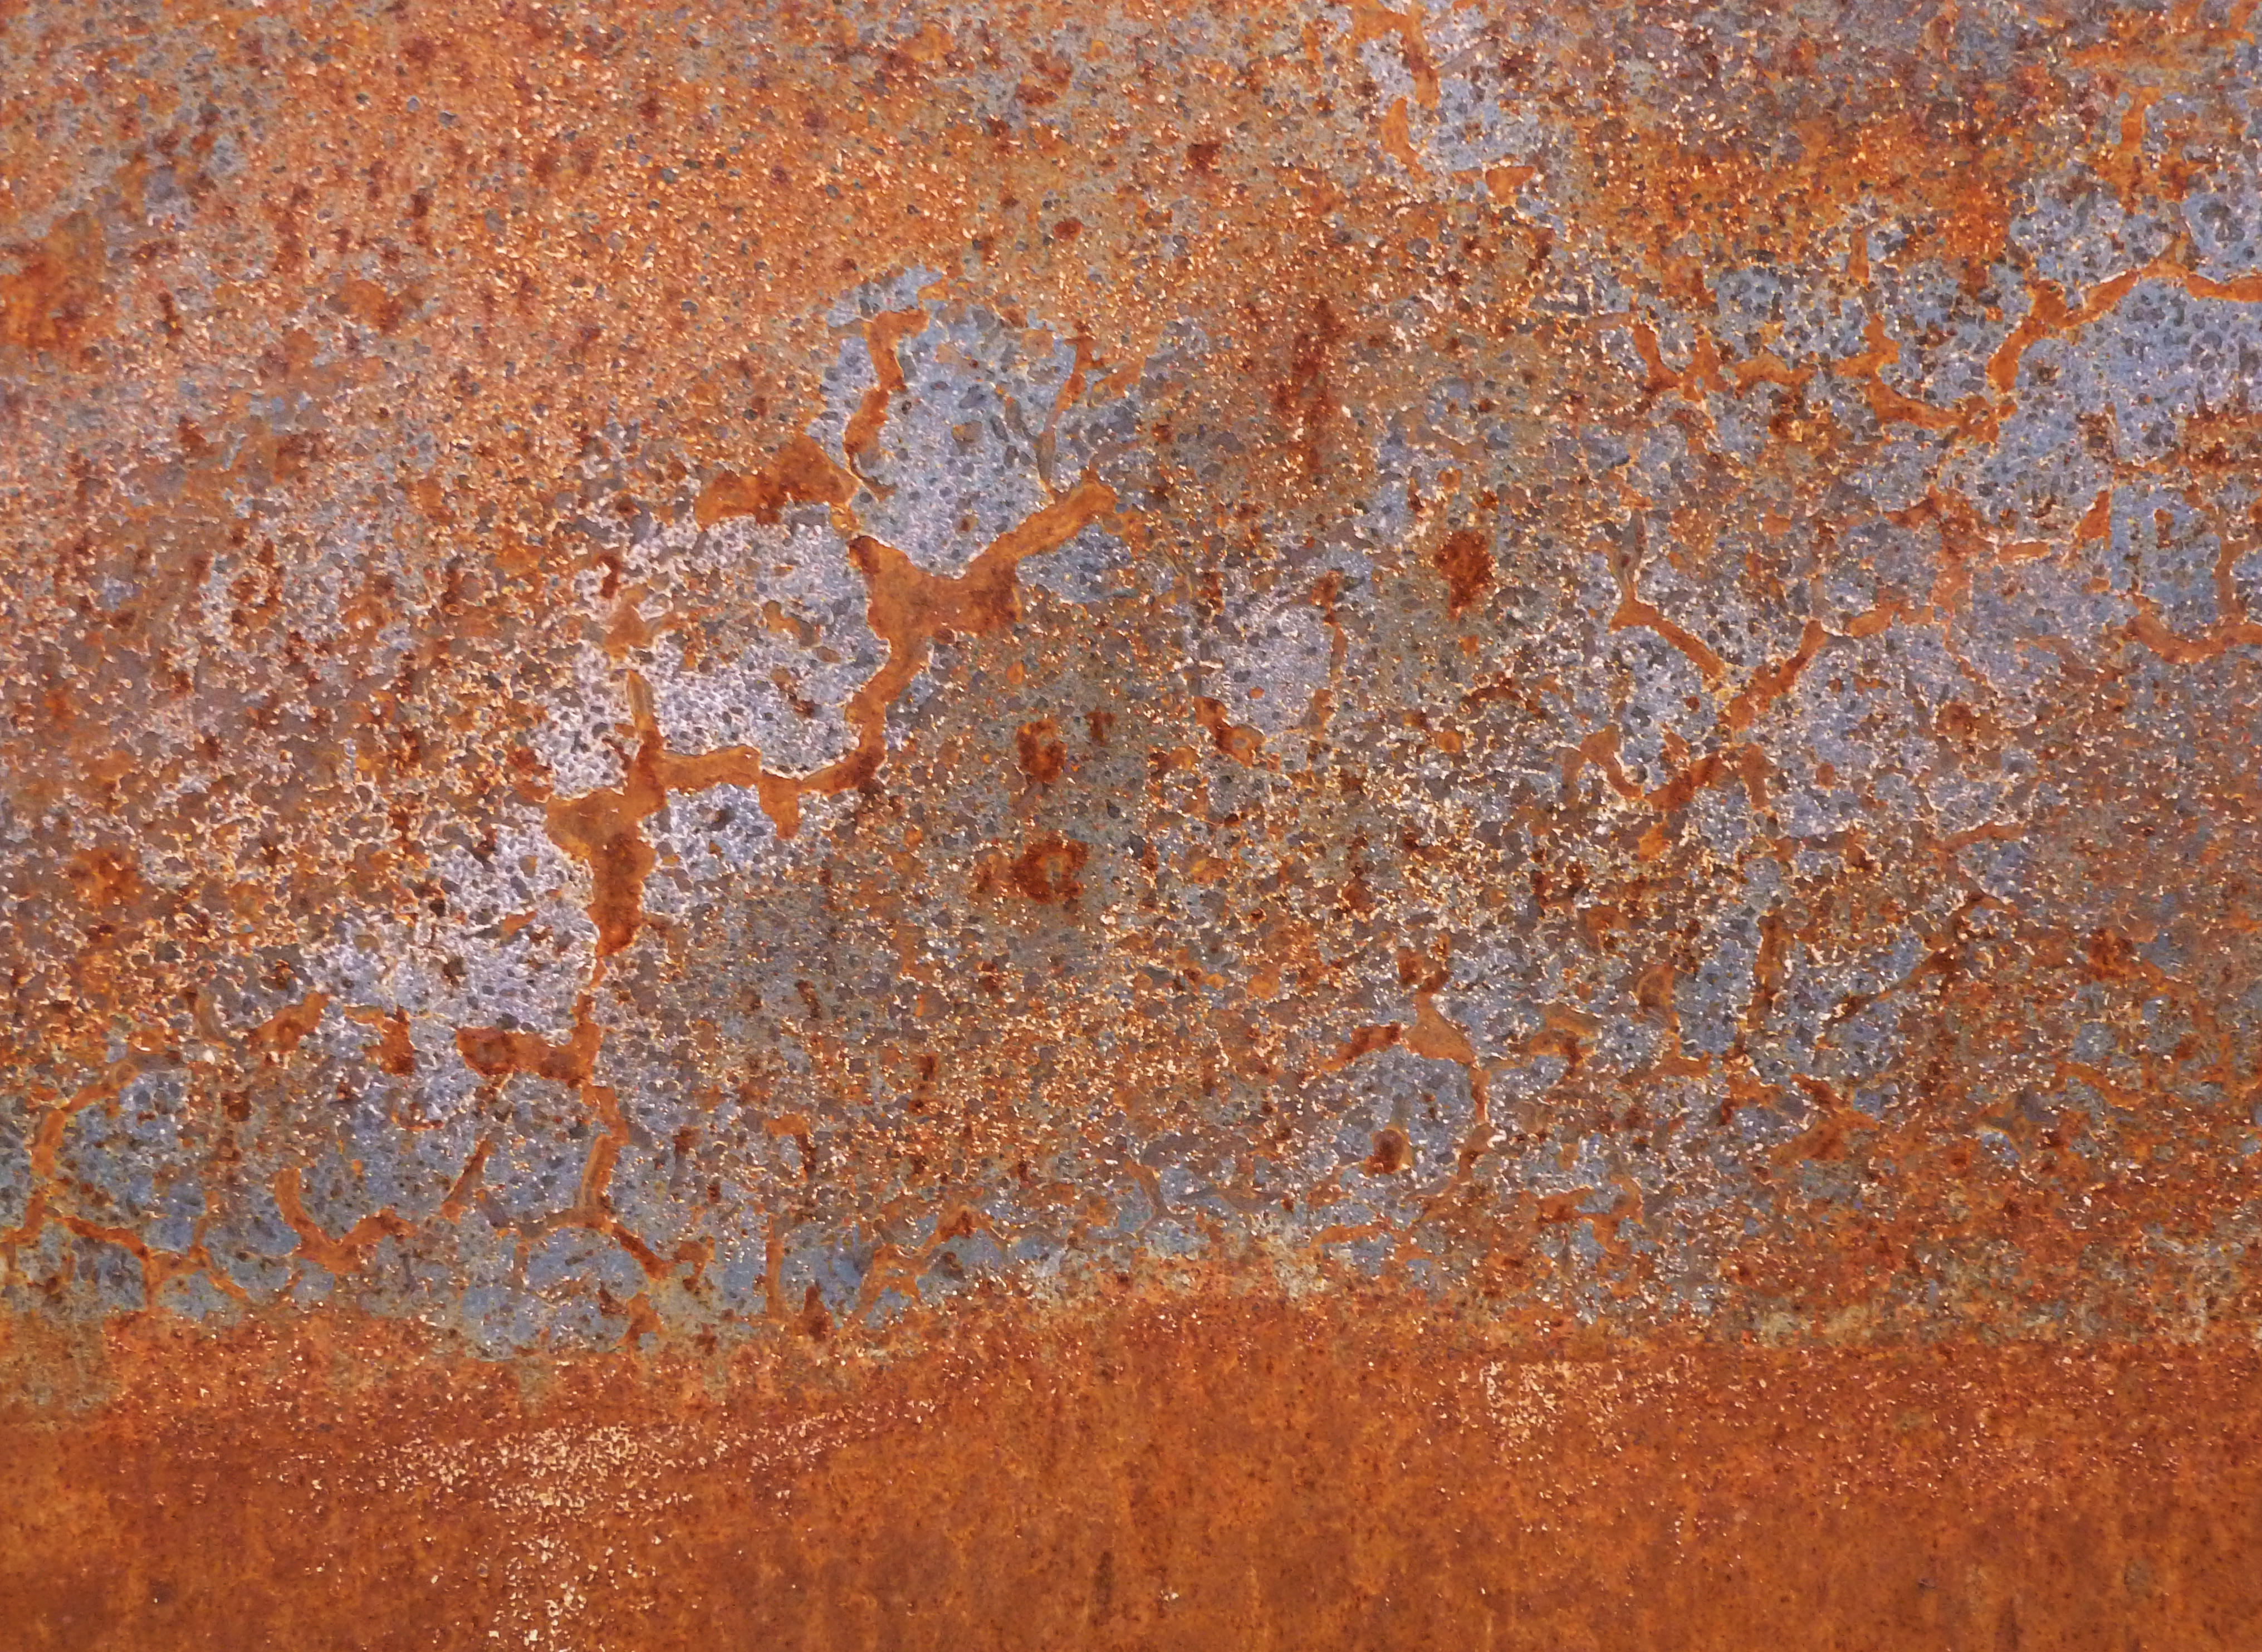 All metals that rust фото 28